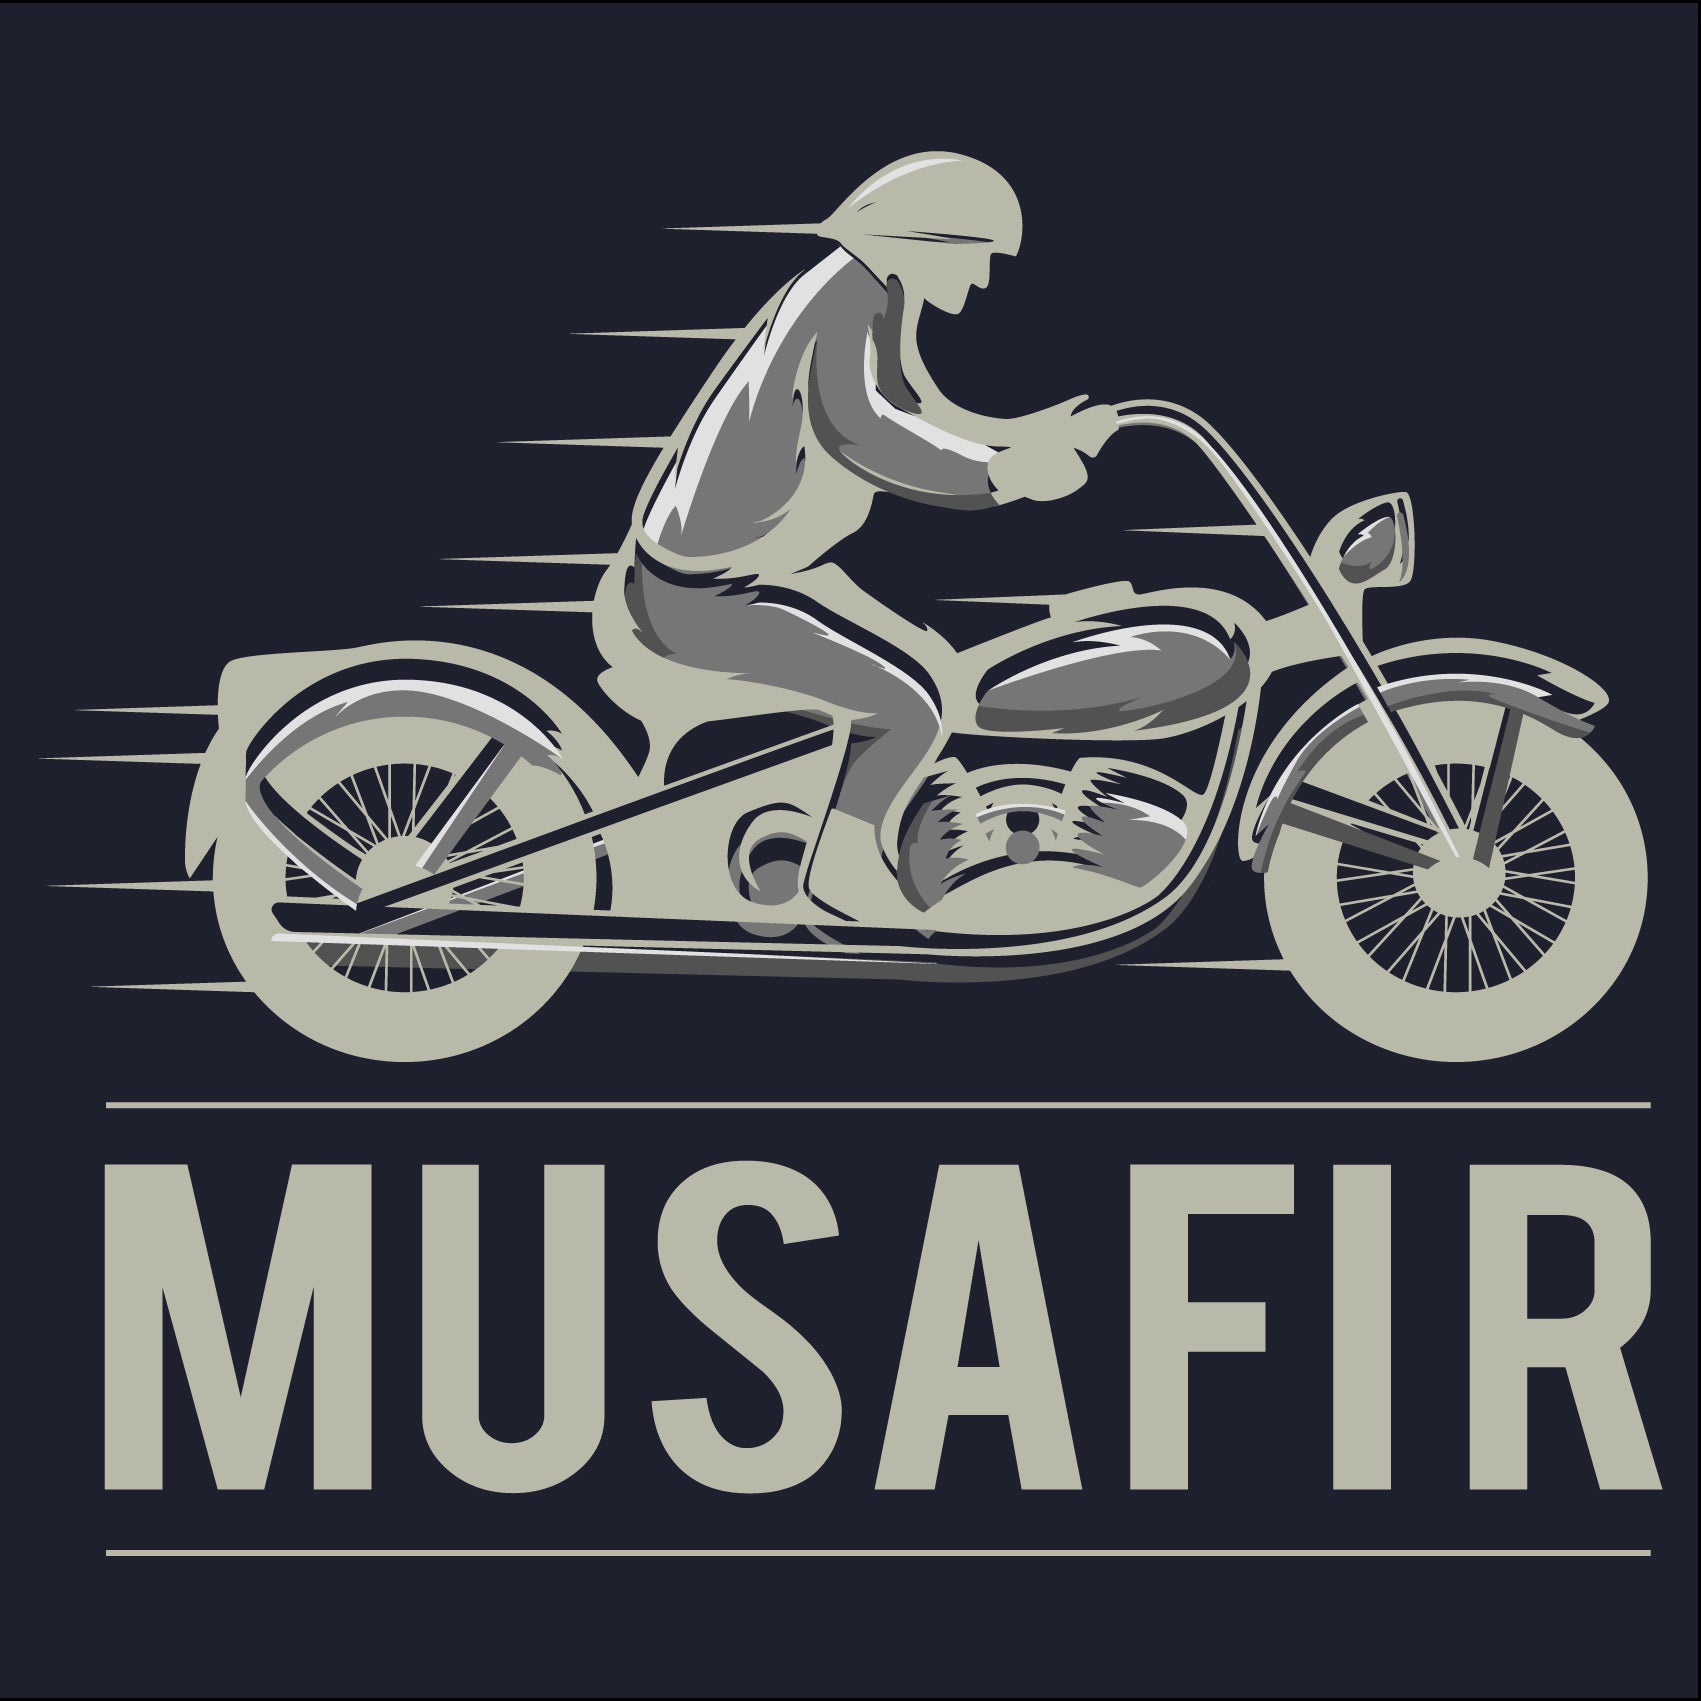 Musafir Reactr Tshirts For Men - Eyewearlabs